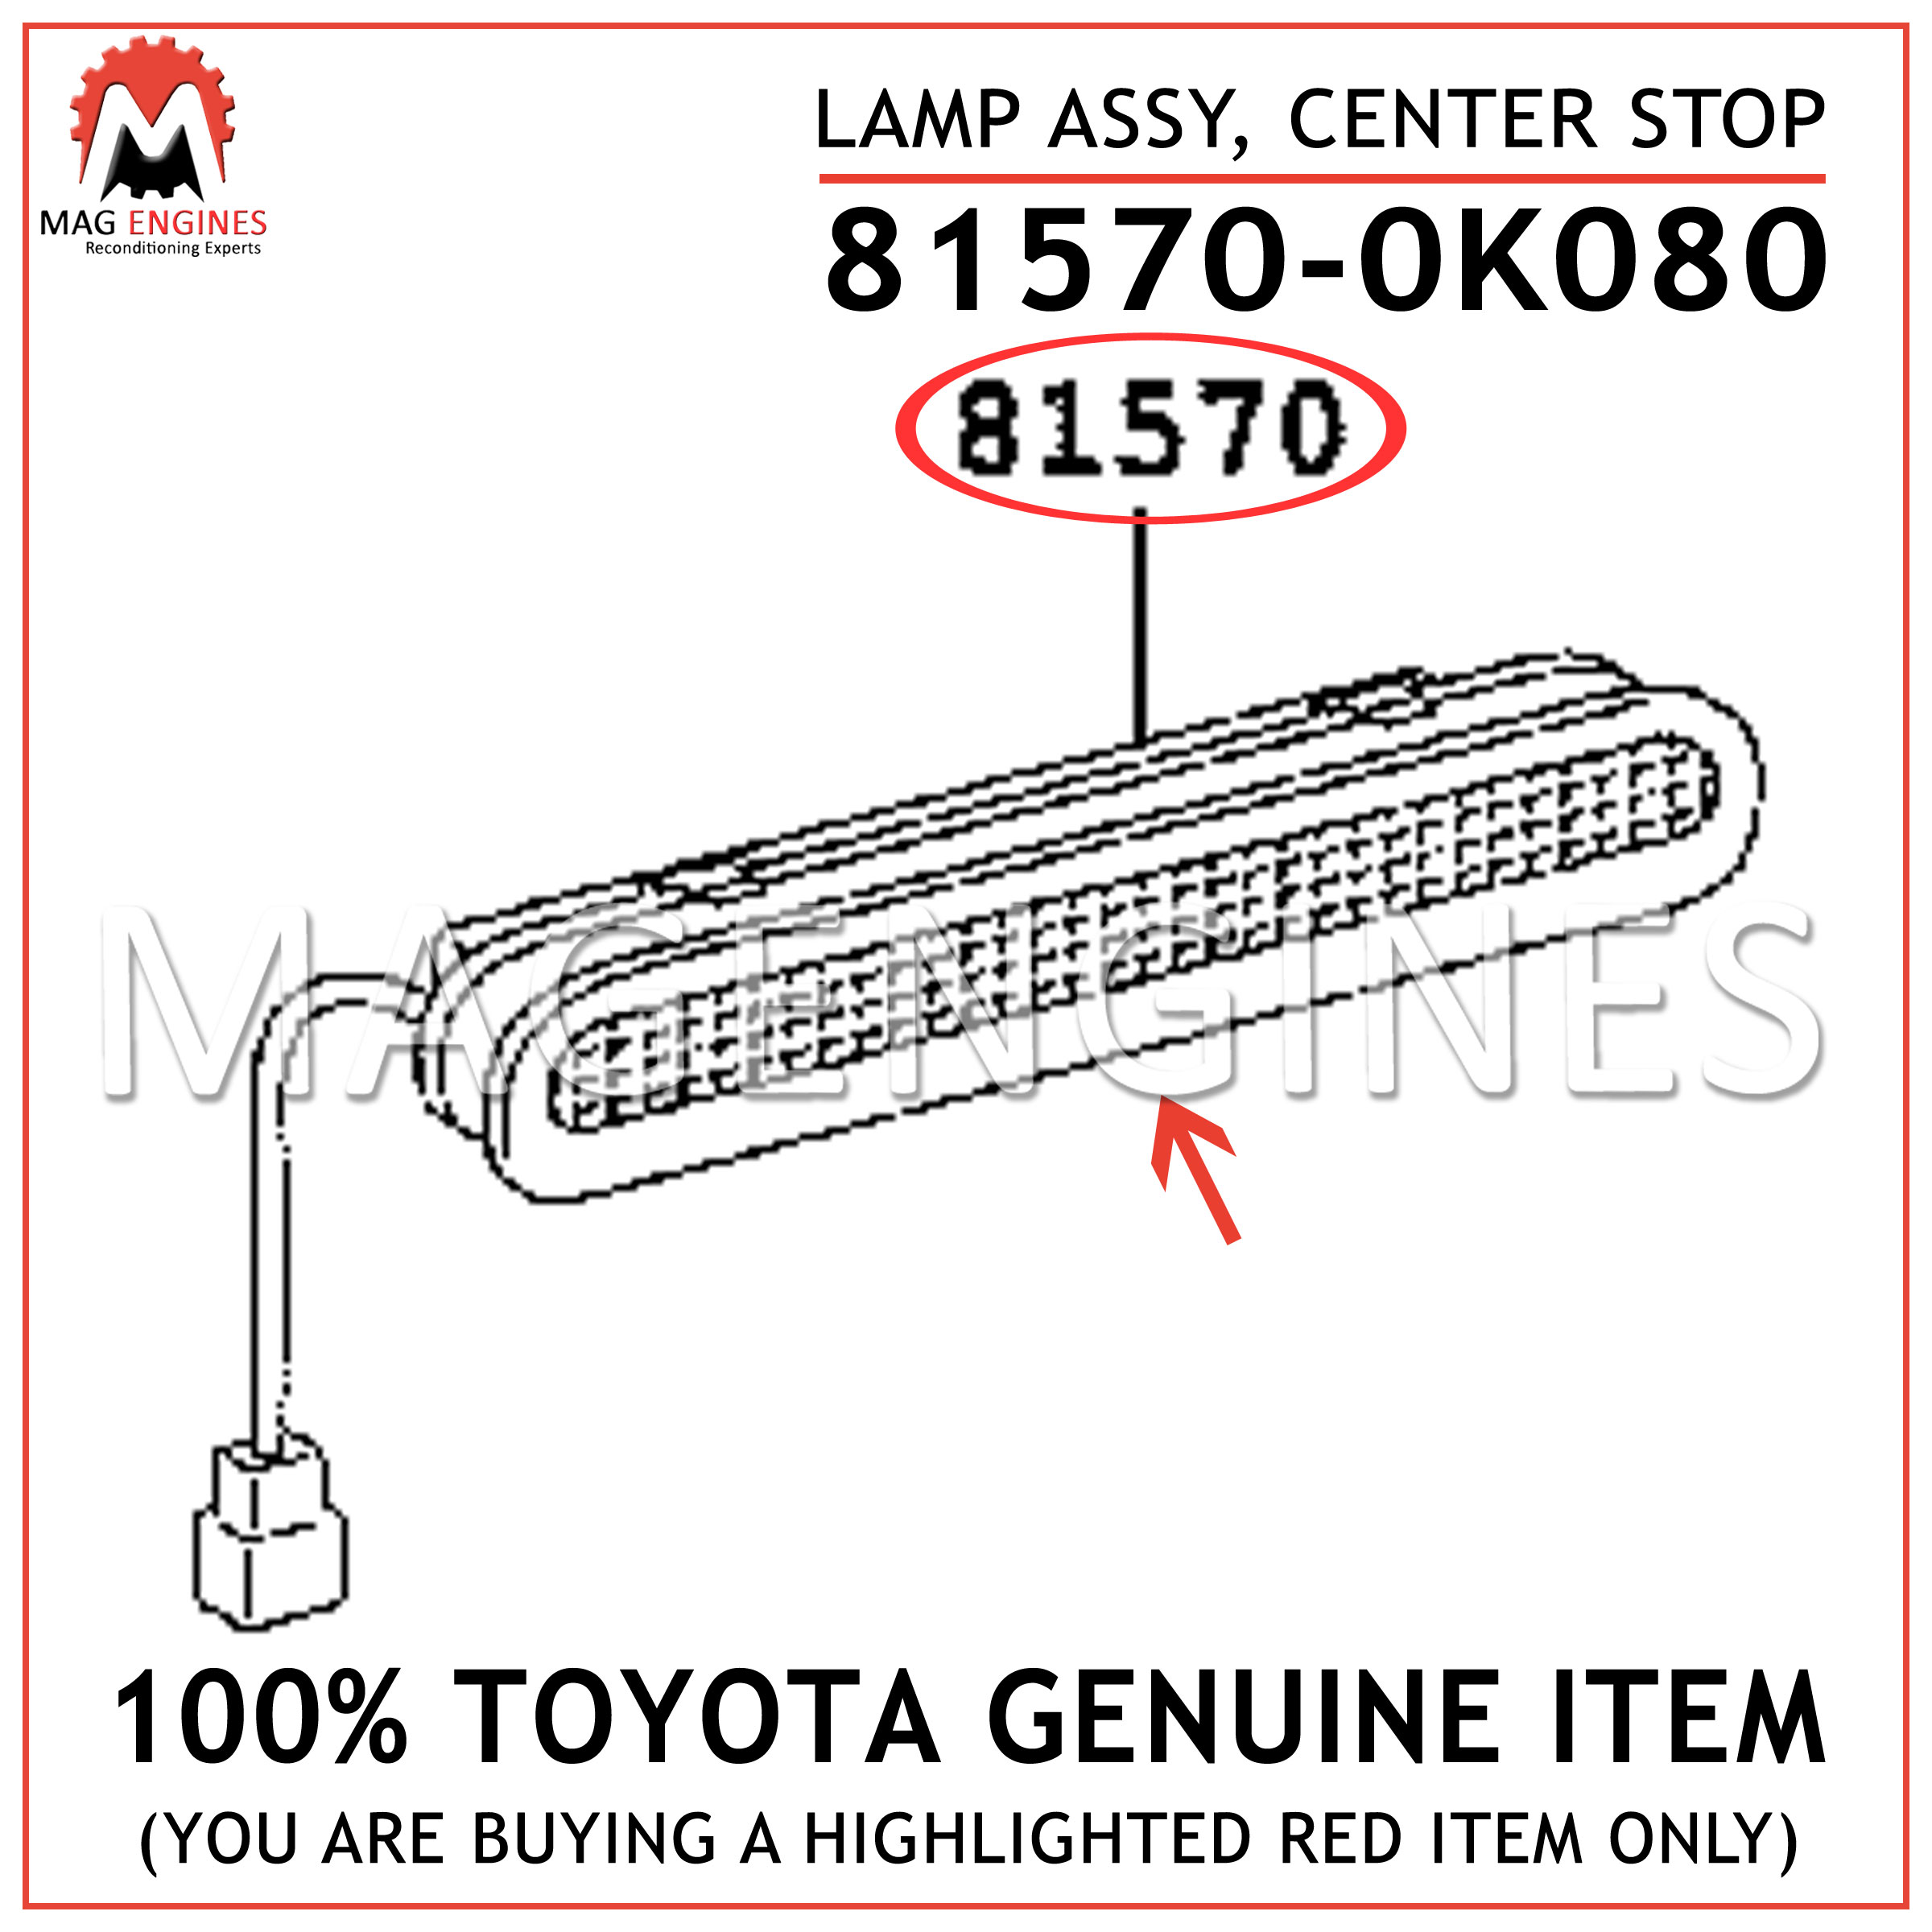 CENTER STOP 81570-48080 Toyota OEM Genuine LAMP ASSY